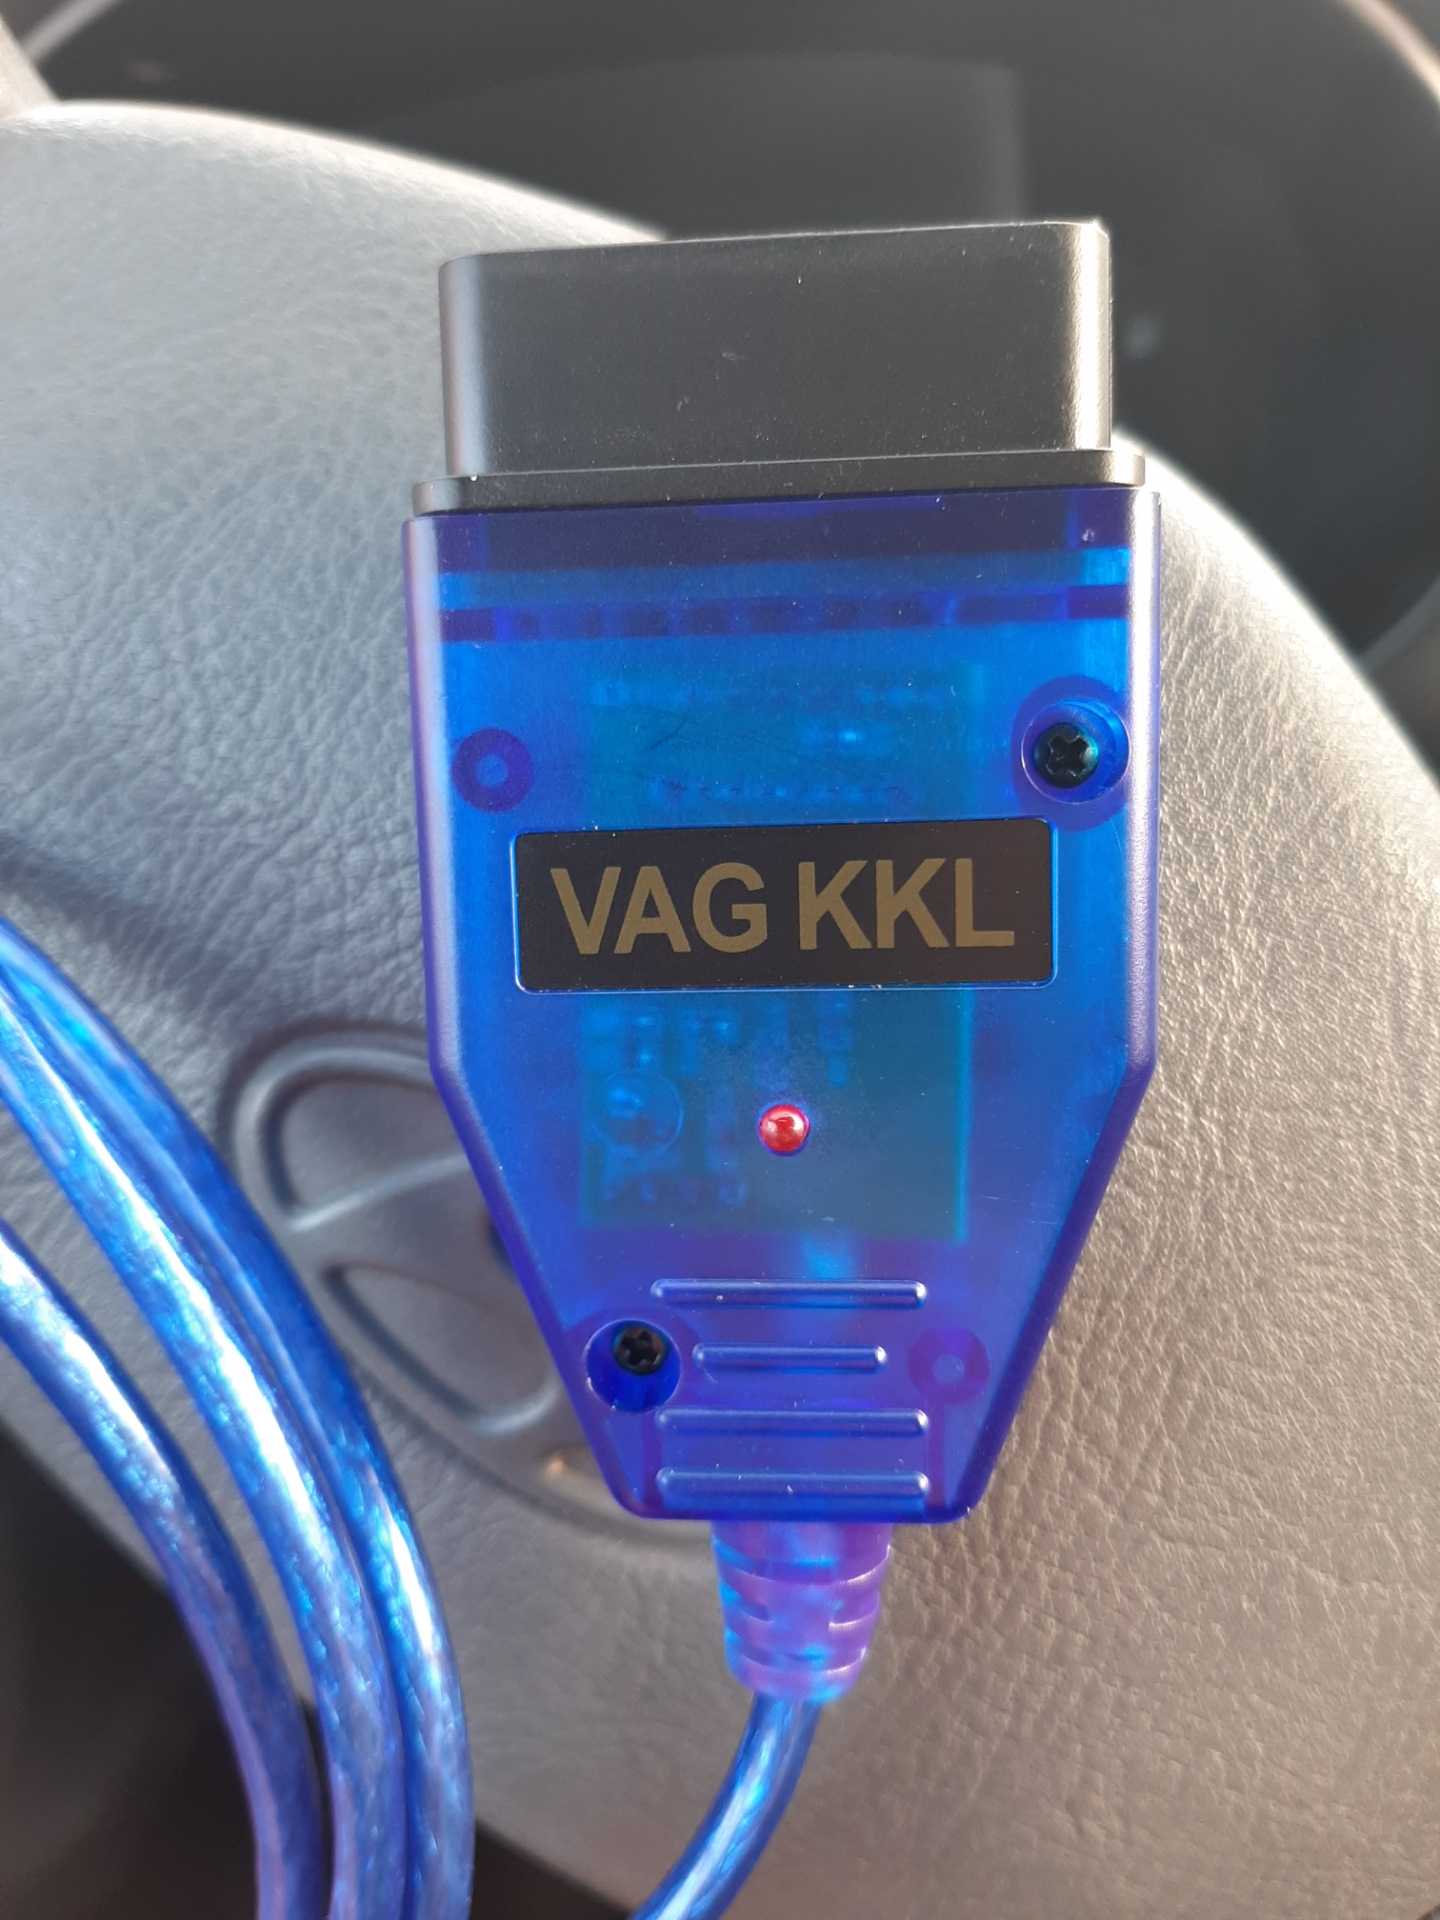 Прошивка акцент. VAG K can 1.4 Hyundai Accent Прошивка. Адаптер для прошивки Хундай акцент. Sh340 KKL. Автосканер Хендай акцент drive2.